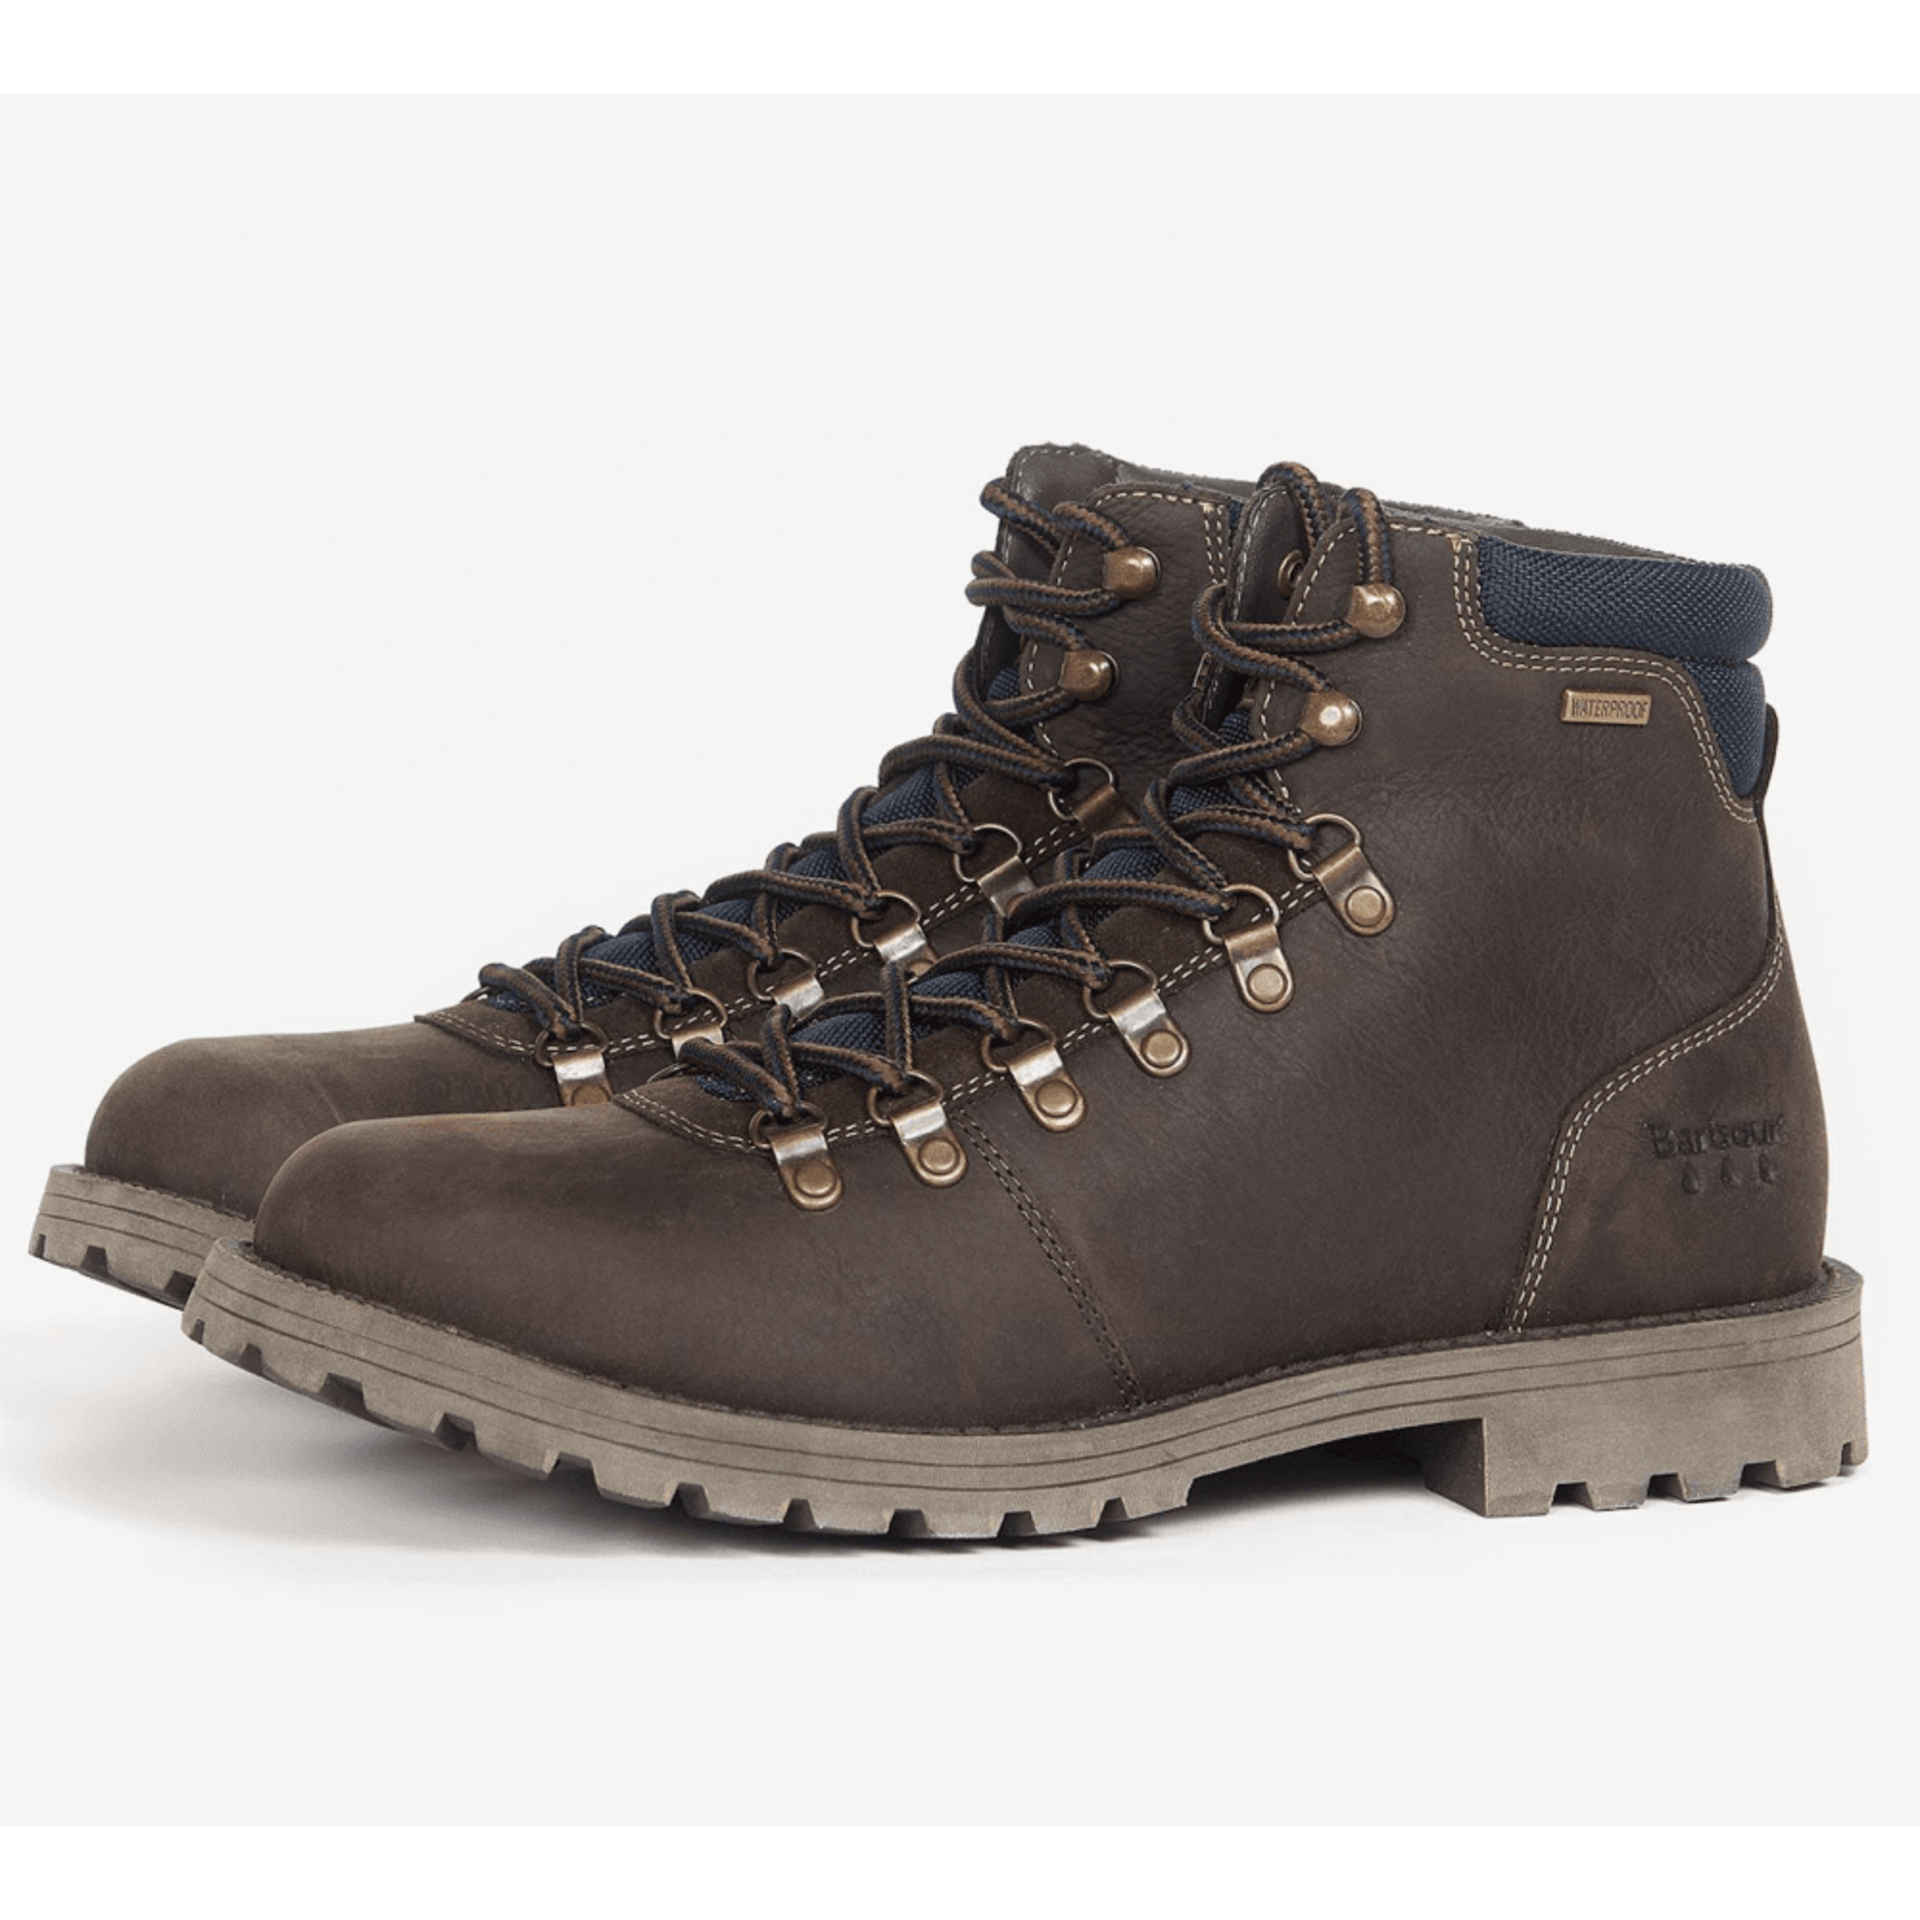 New Size 7 Barbour Oak Quantock Hiker Boots - RRP £159.